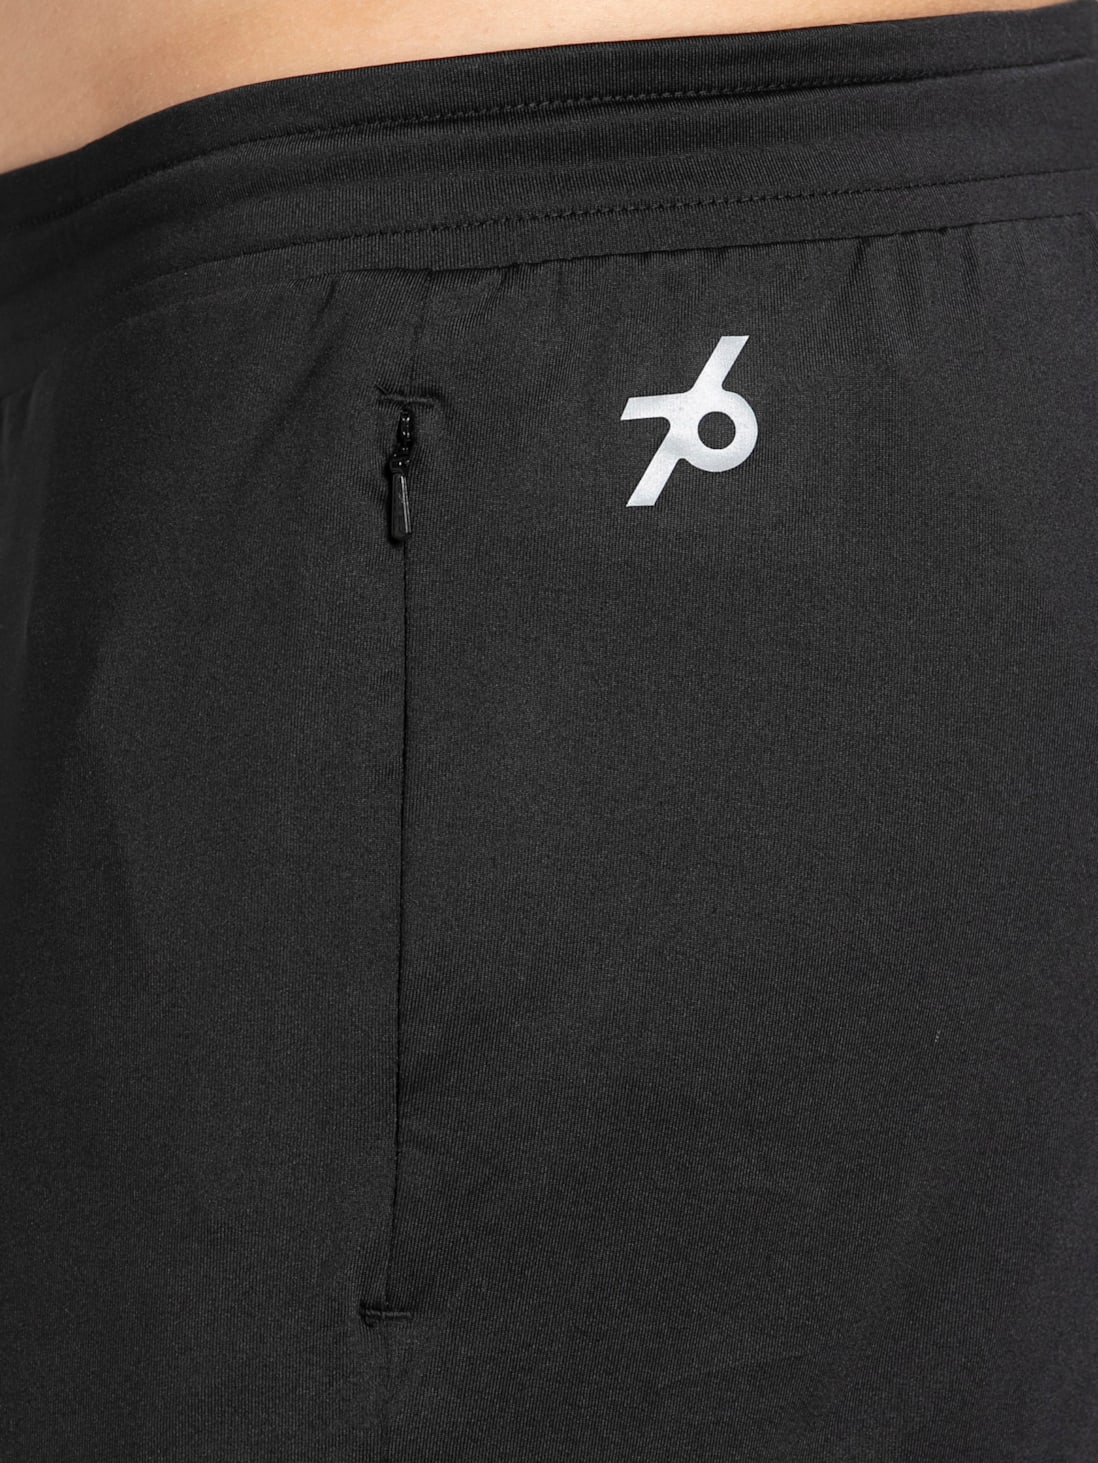 Buy Black Track Pants for Men by Jockey Online  Ajiocom